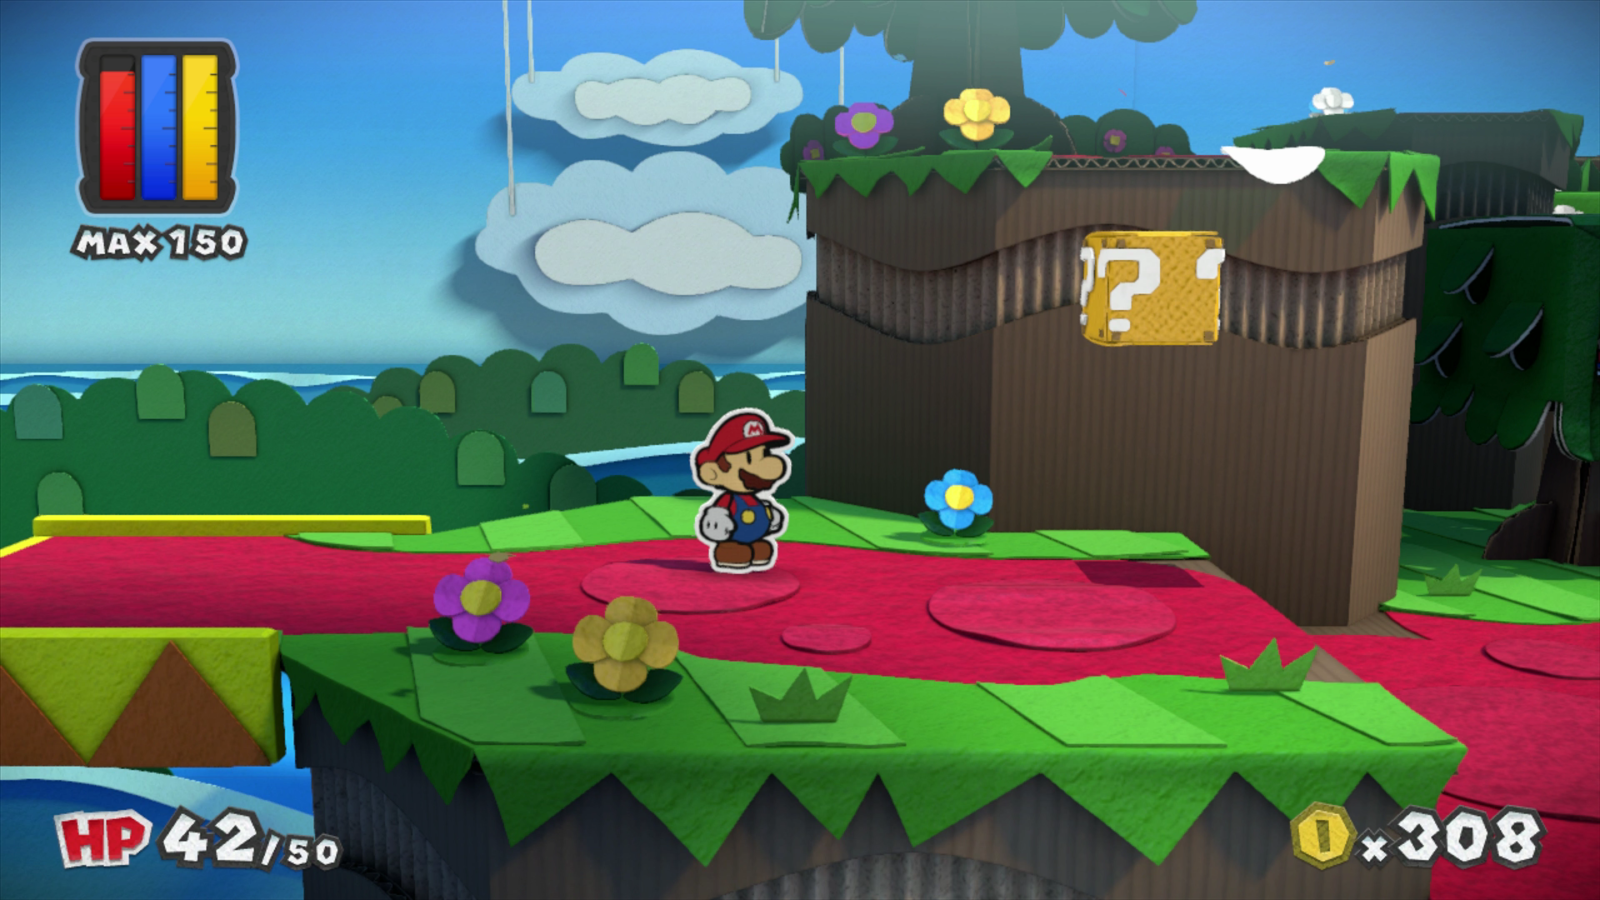 REVIEW: Paper Mario Color Splash (Wii U)